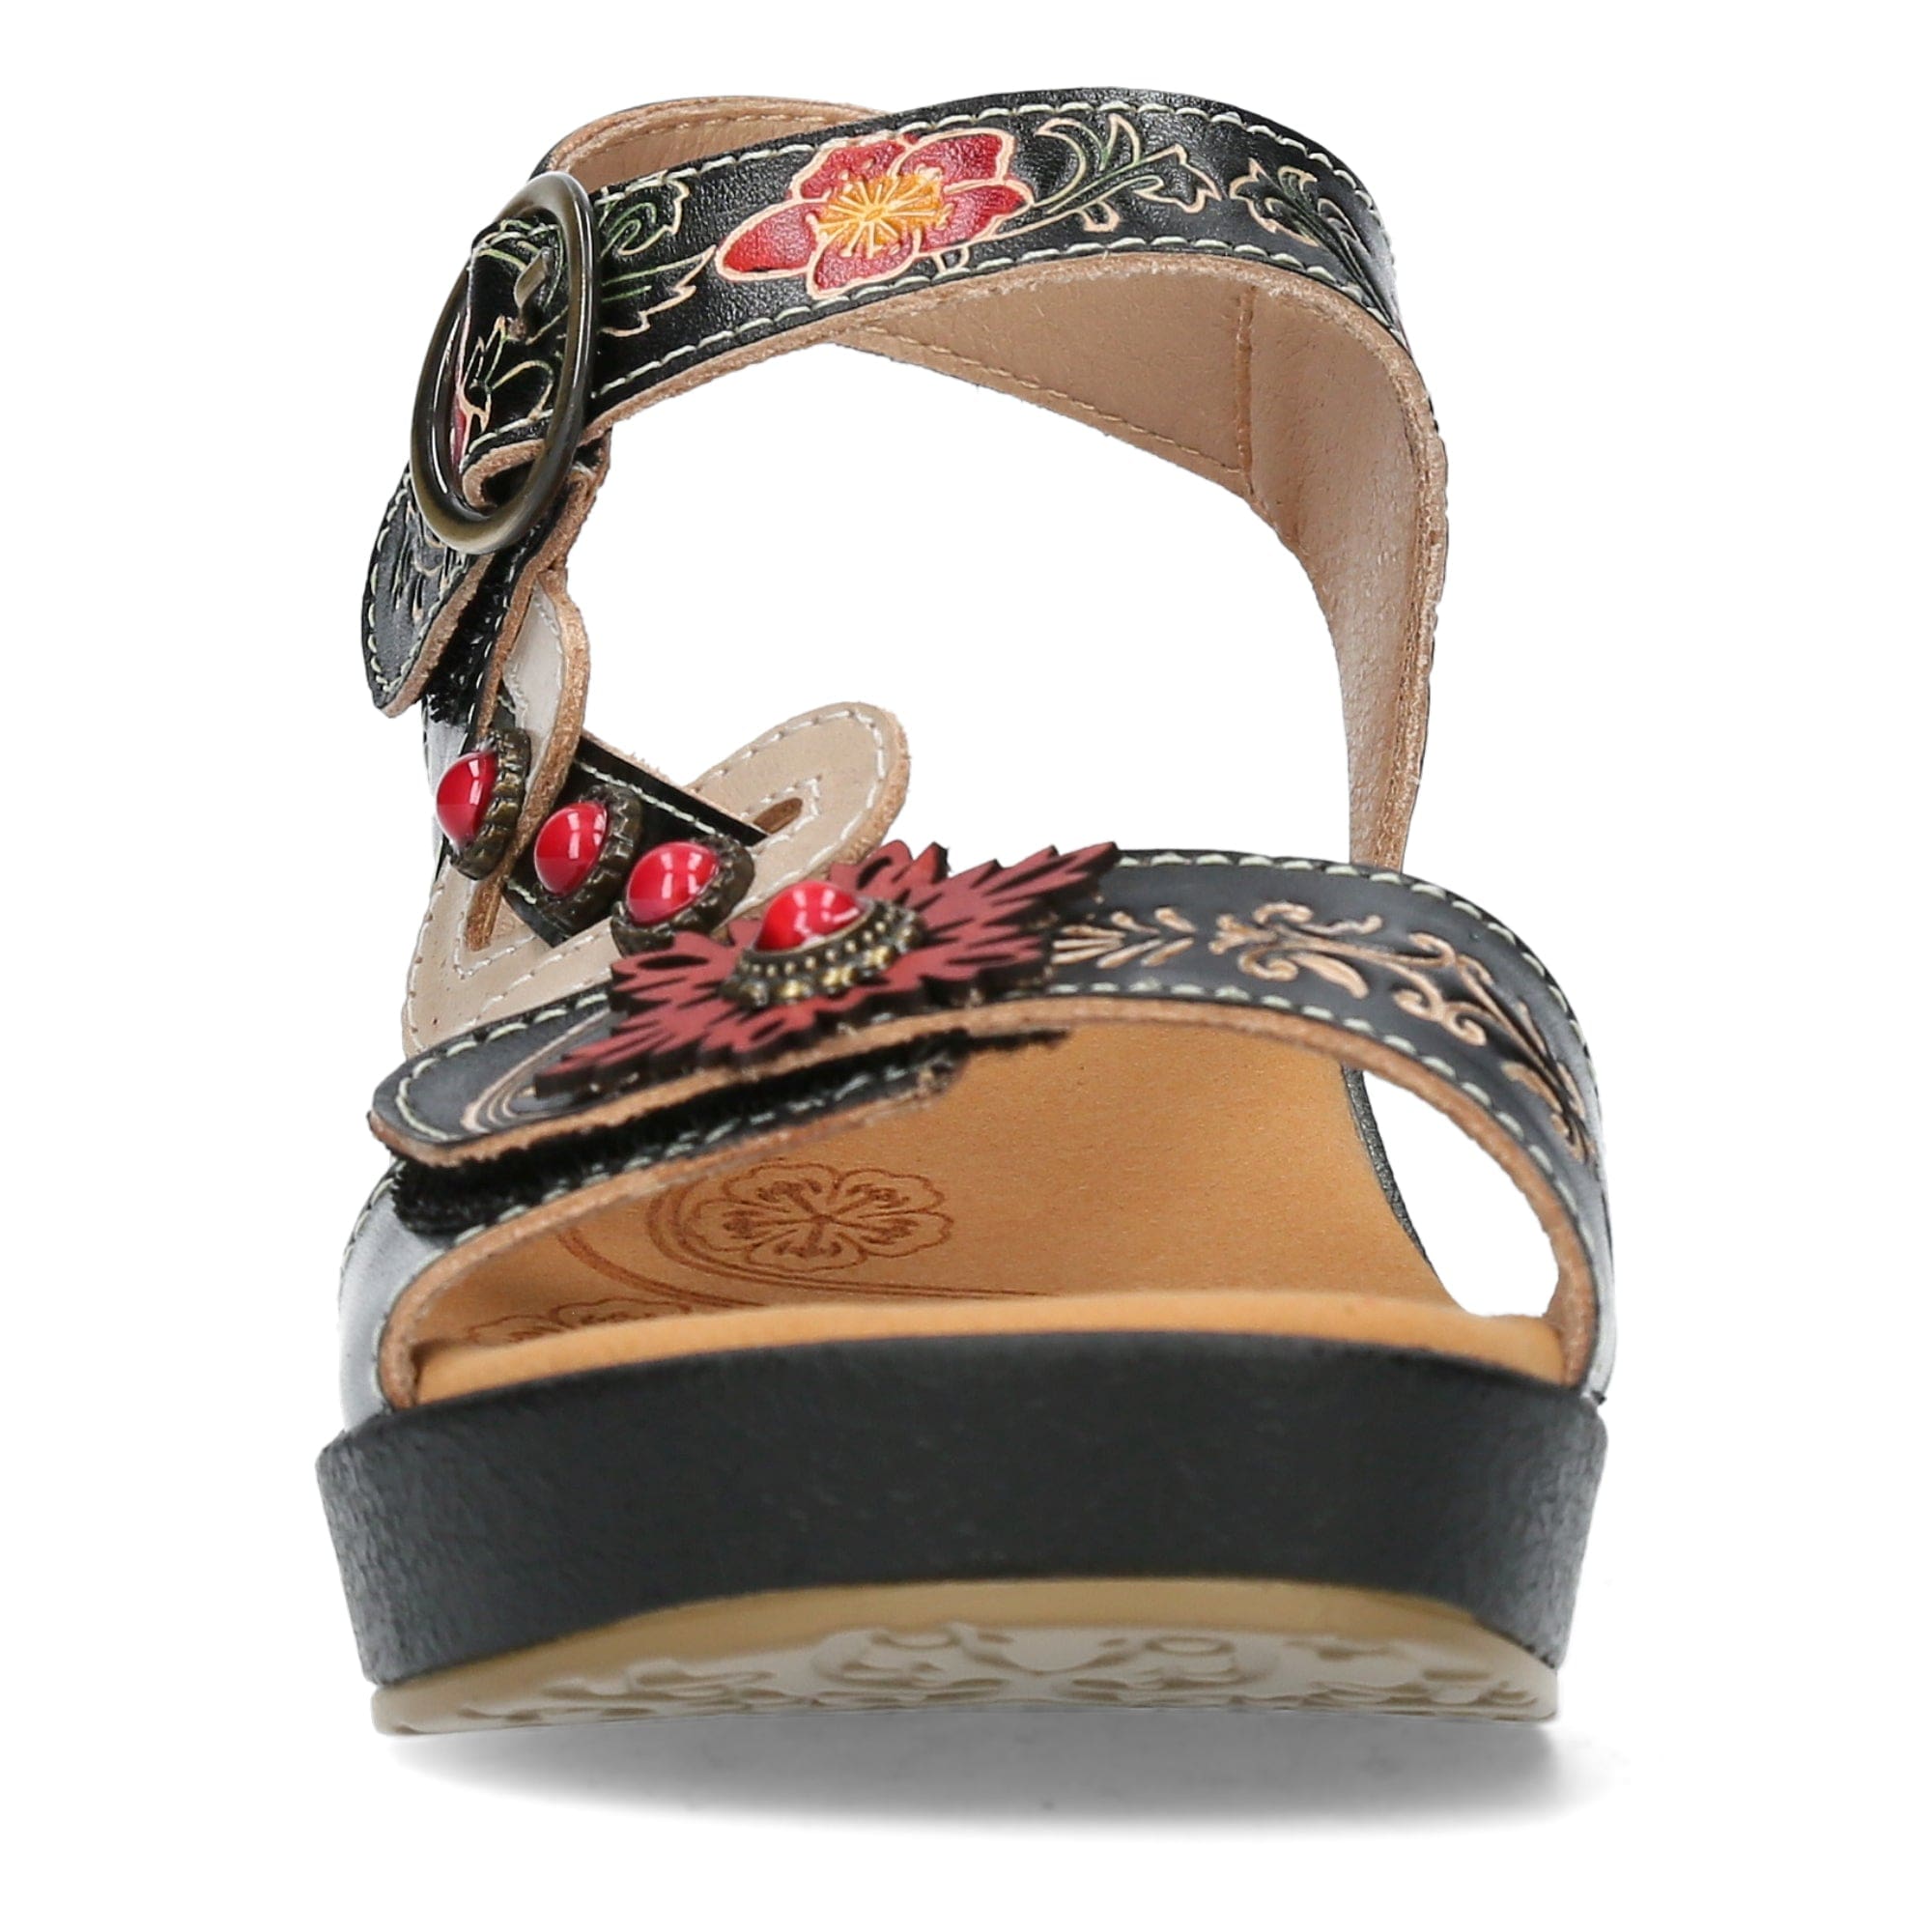 Chaussure FACRAHO 124 - Sandale